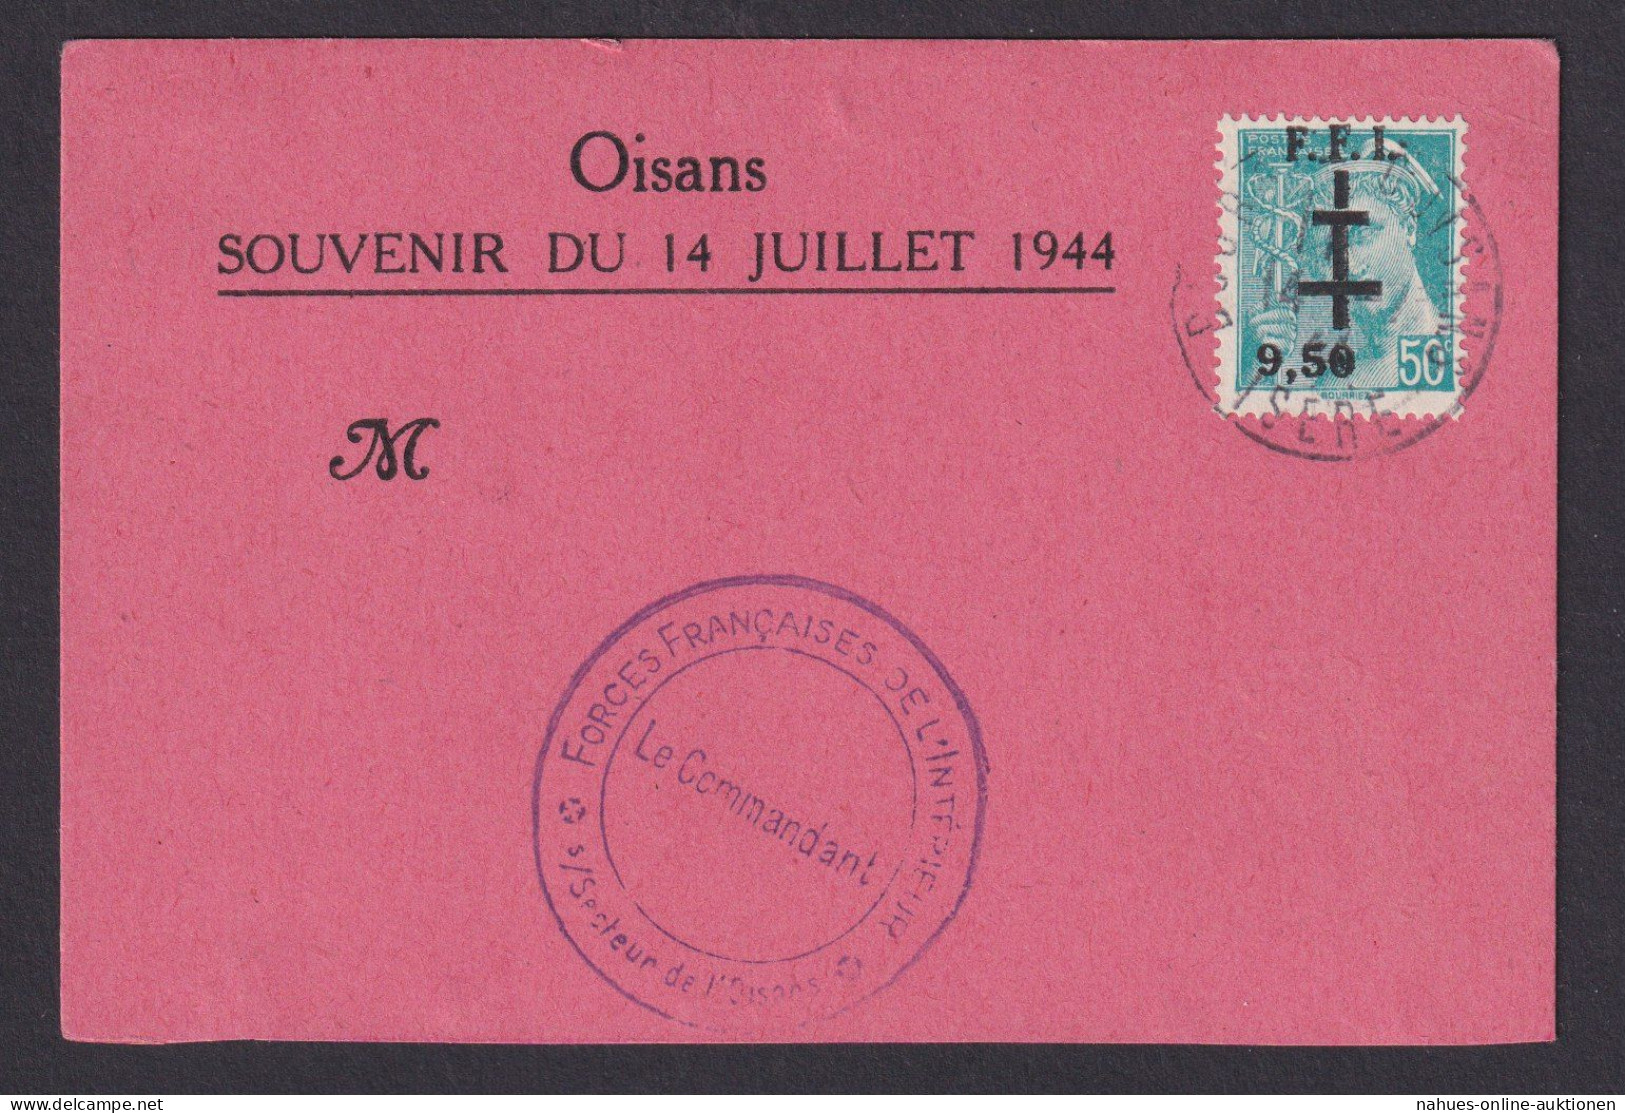 Frankreich Oisans Souvenir Du 14 Juillet 1944 Aufdruck F.F.I. 9,50 Auf 50c - Lettres & Documents